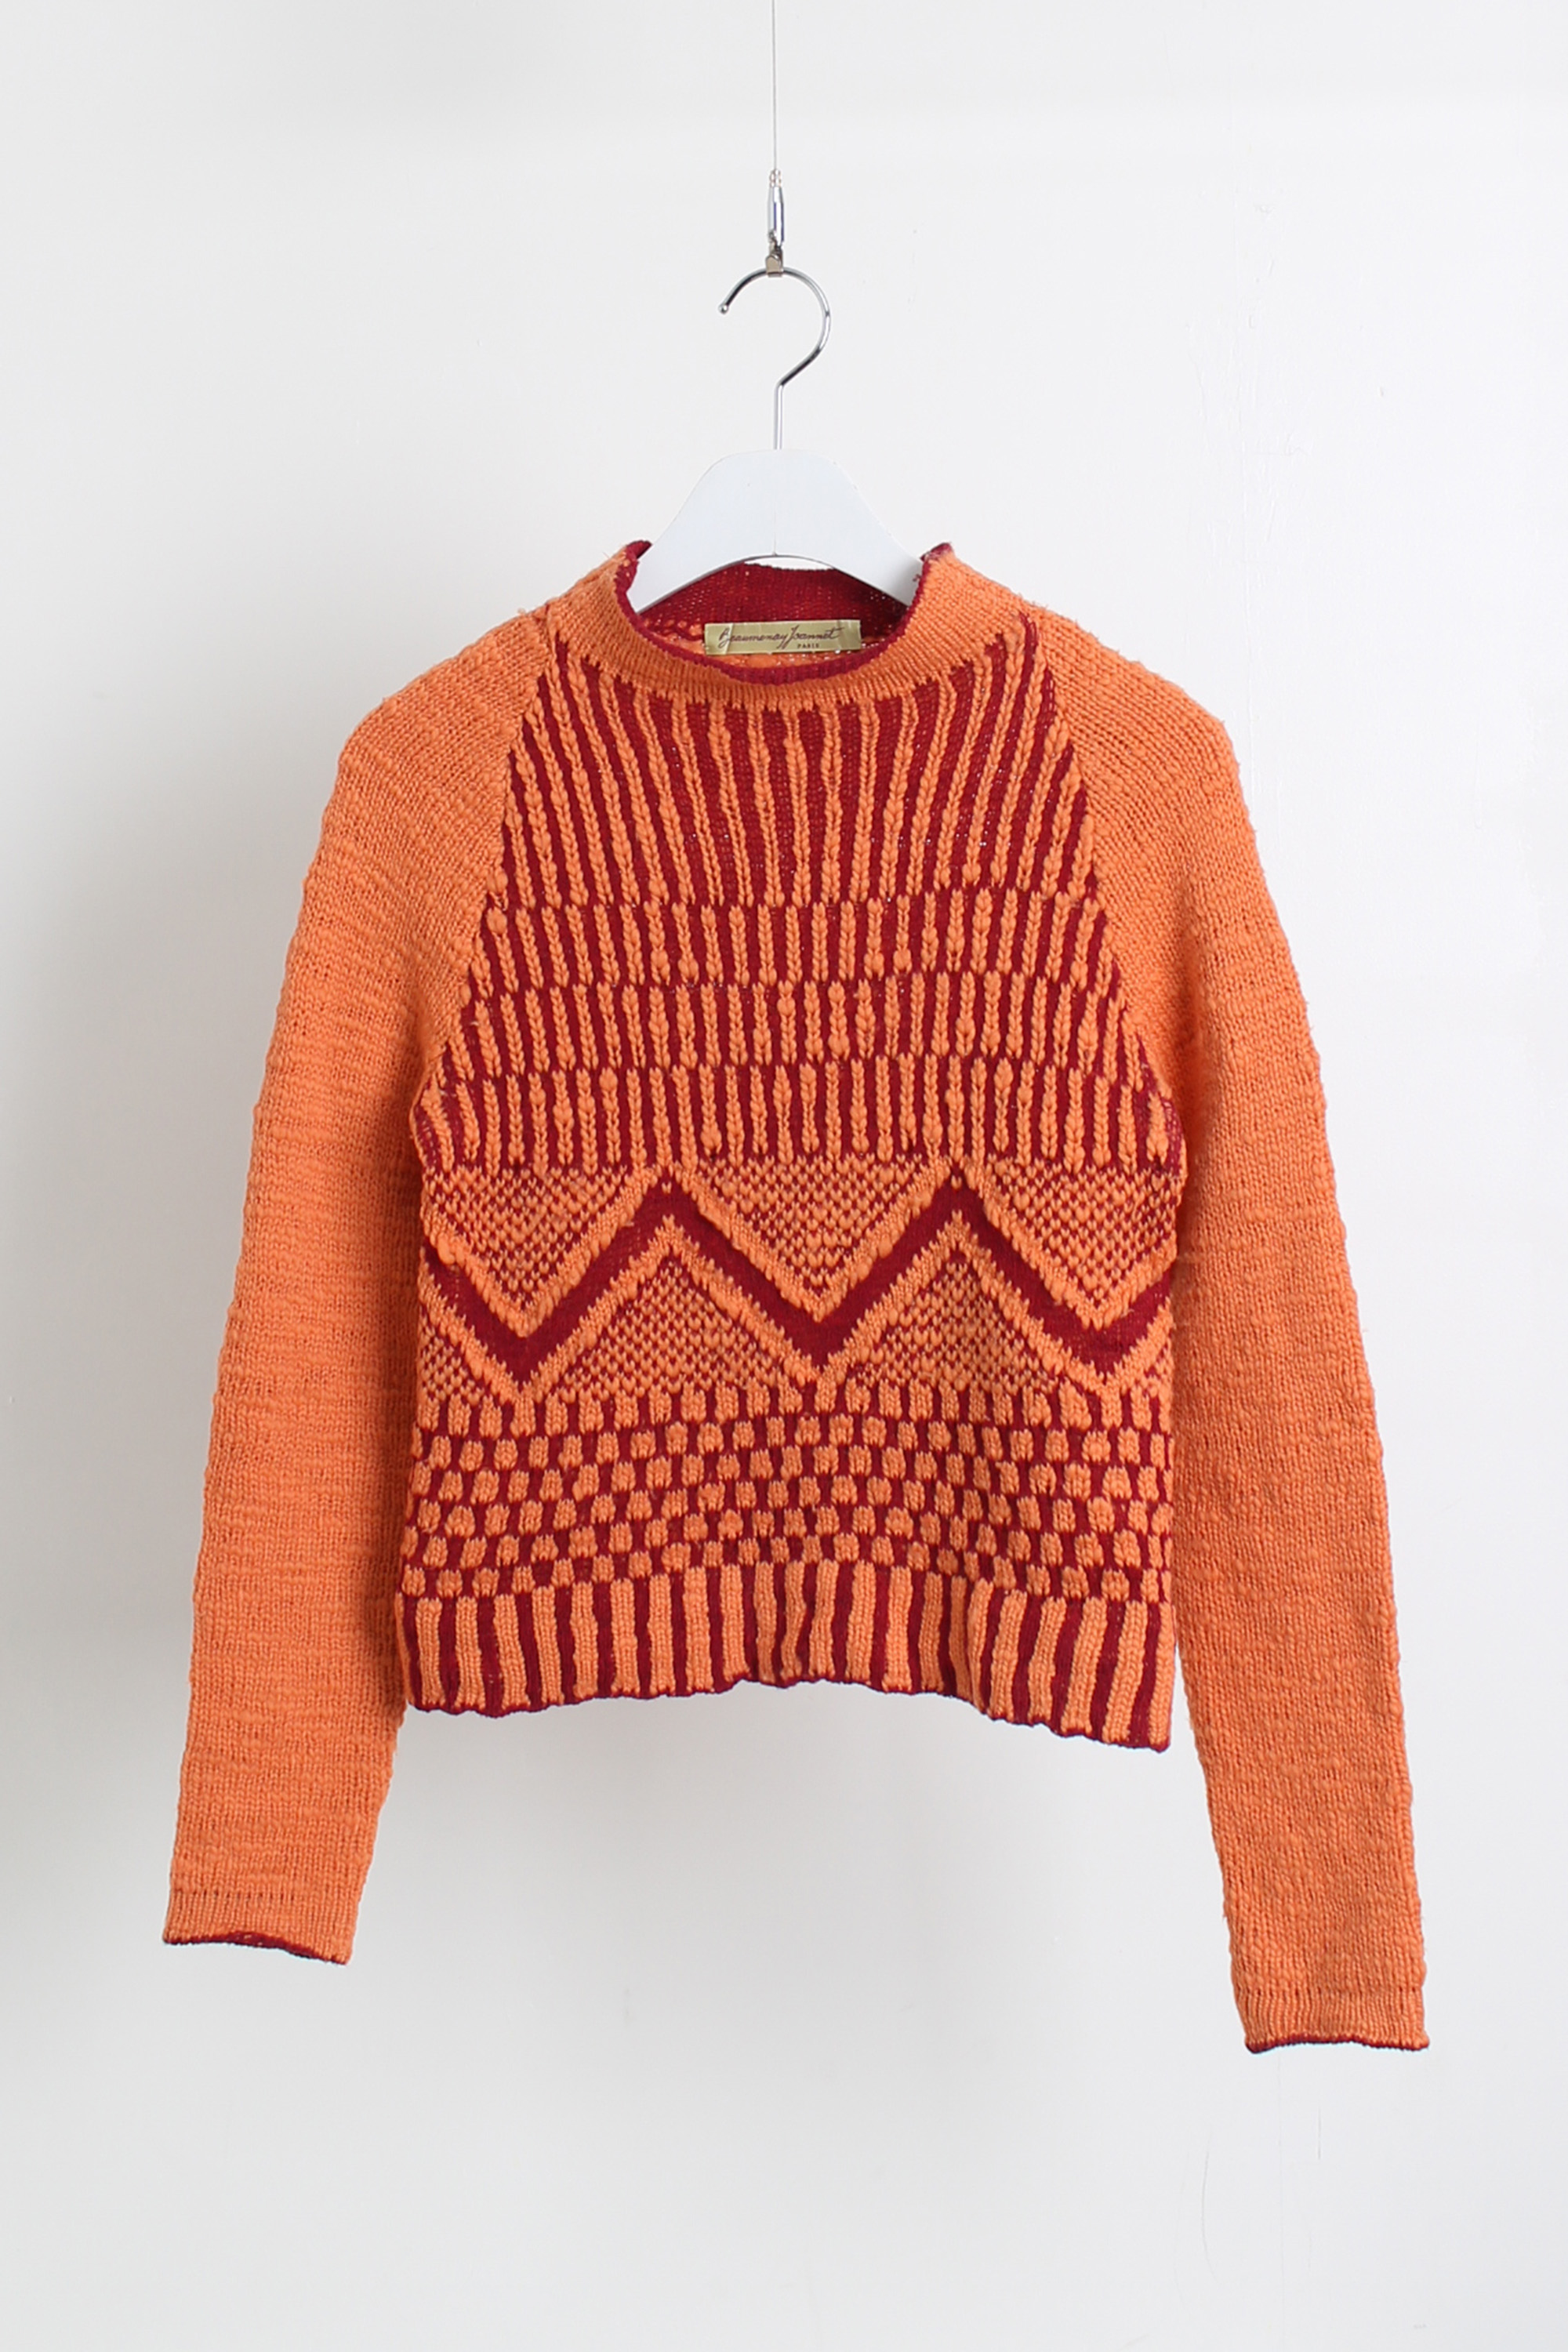 Beaumenay Toannet knit